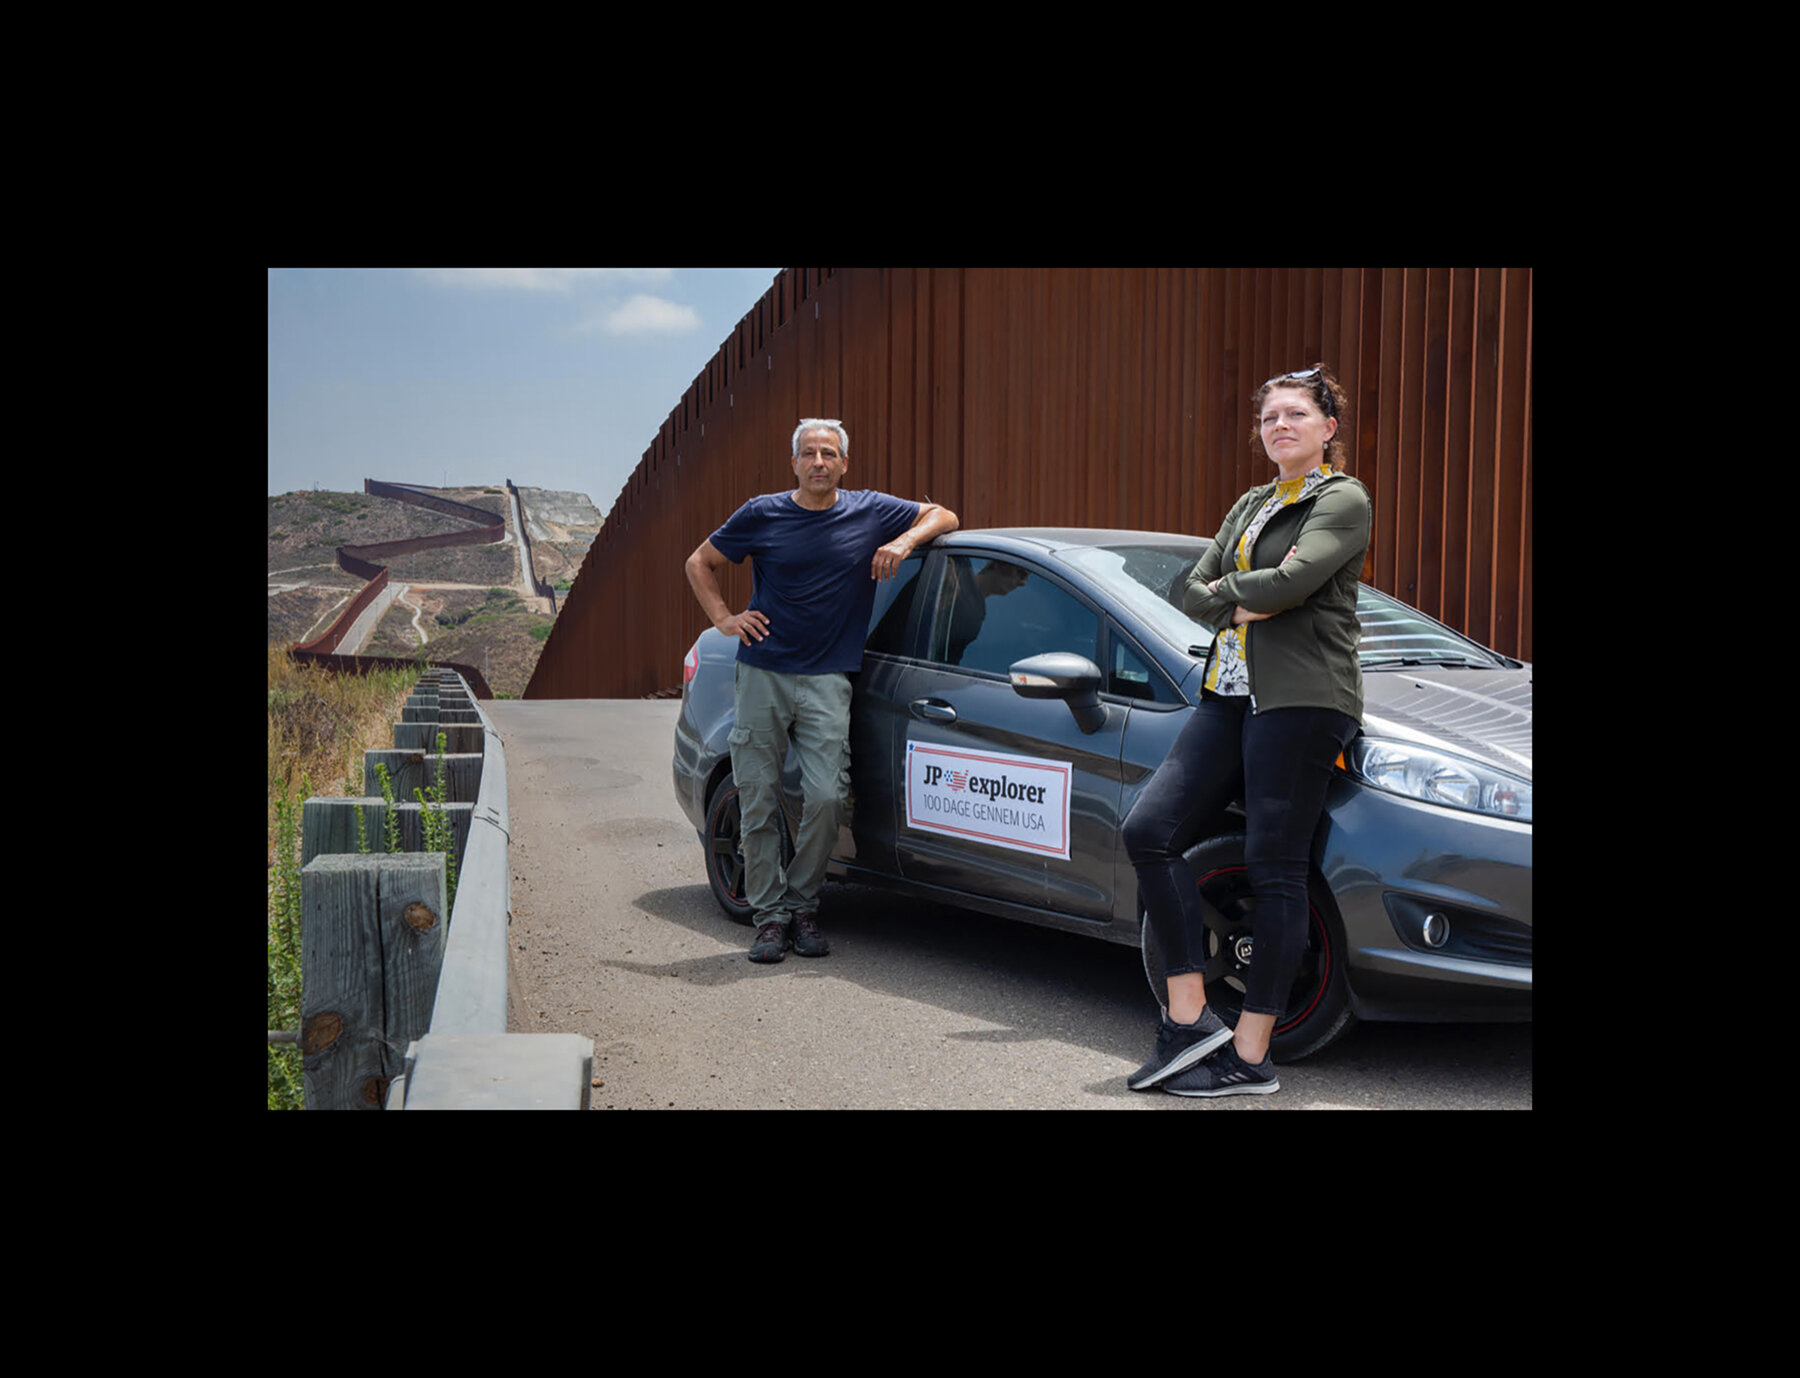  Photographer Ed Kashi and Journalist Heidi Plougsgaard Jensen pose with their Jyllands-Posten Explorer vehicle along the US-Mexican border wall near Chula Vista, California. 